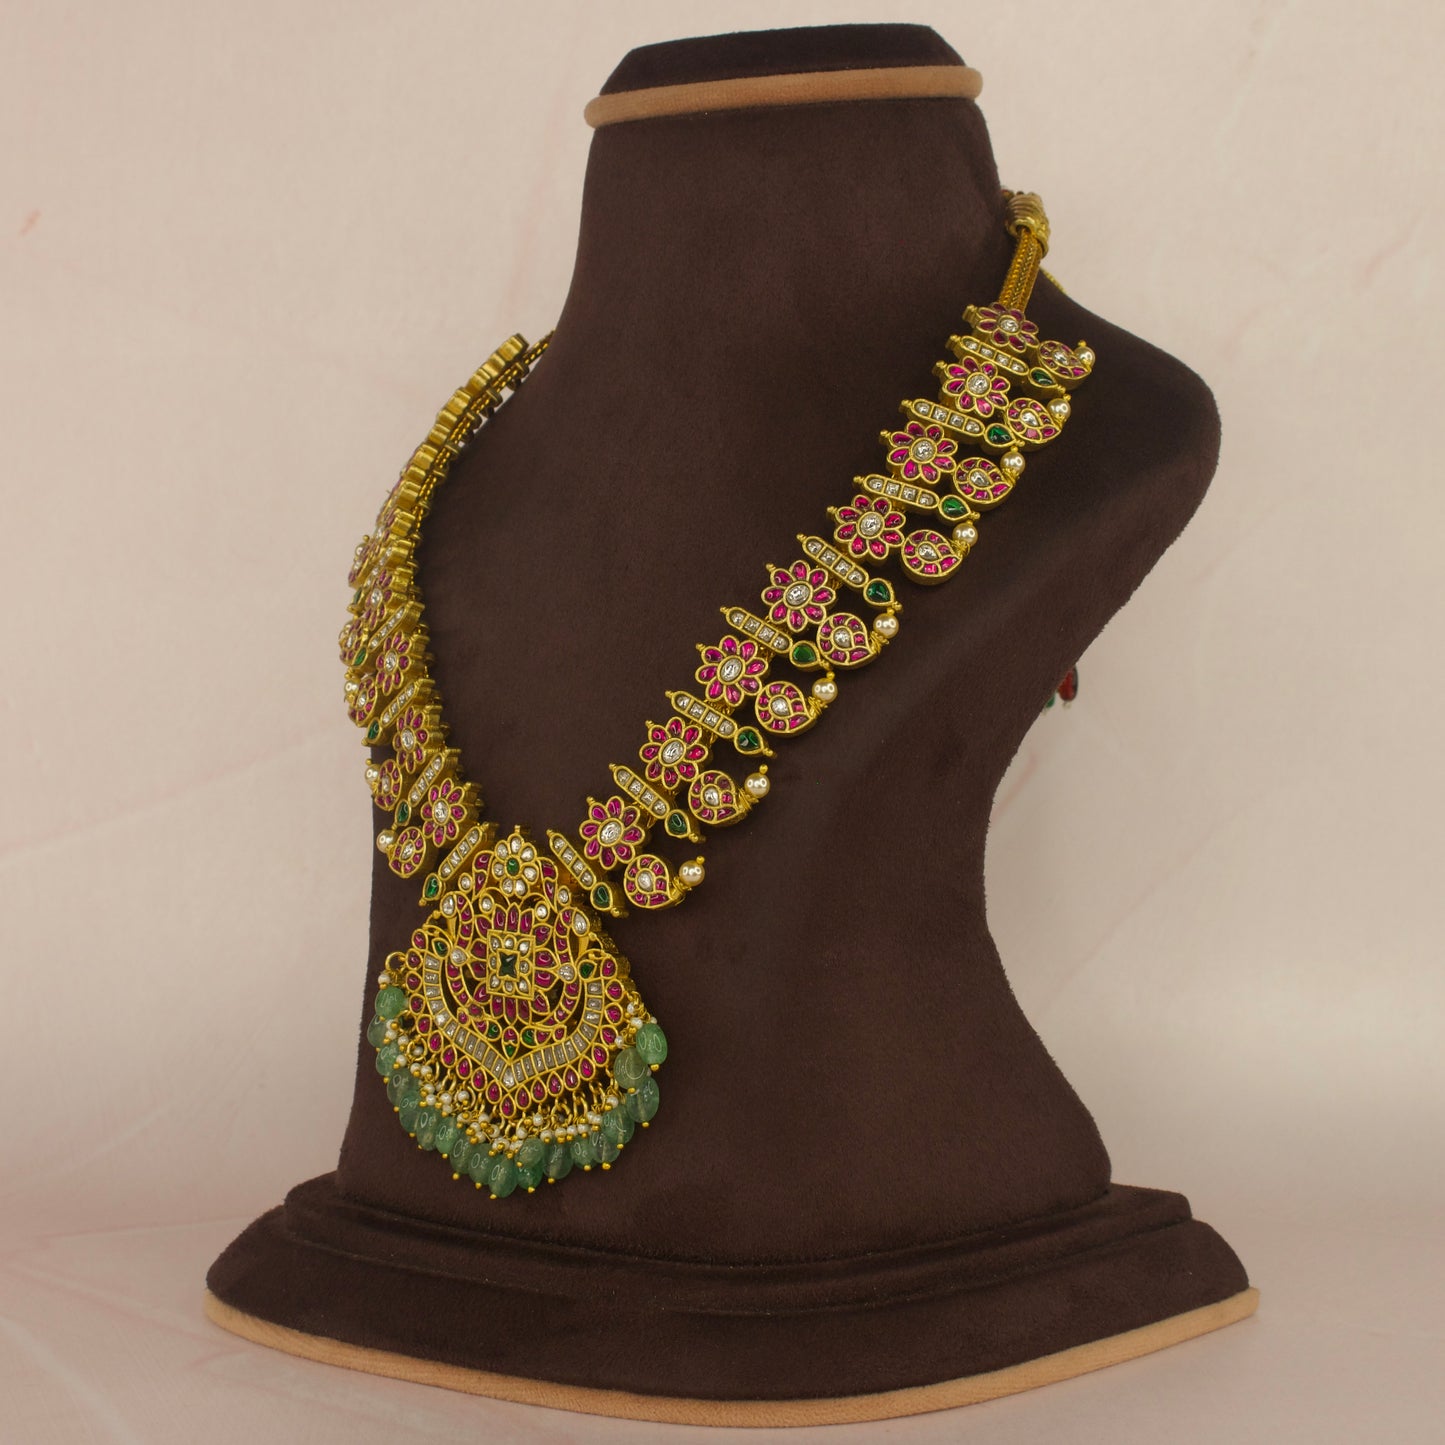 Grand Jadau Kundan Mango Necklace with Ruby and Emerald Adornmentswith 22k gold plating This product belongs to Jadau Kundan jewellery category 